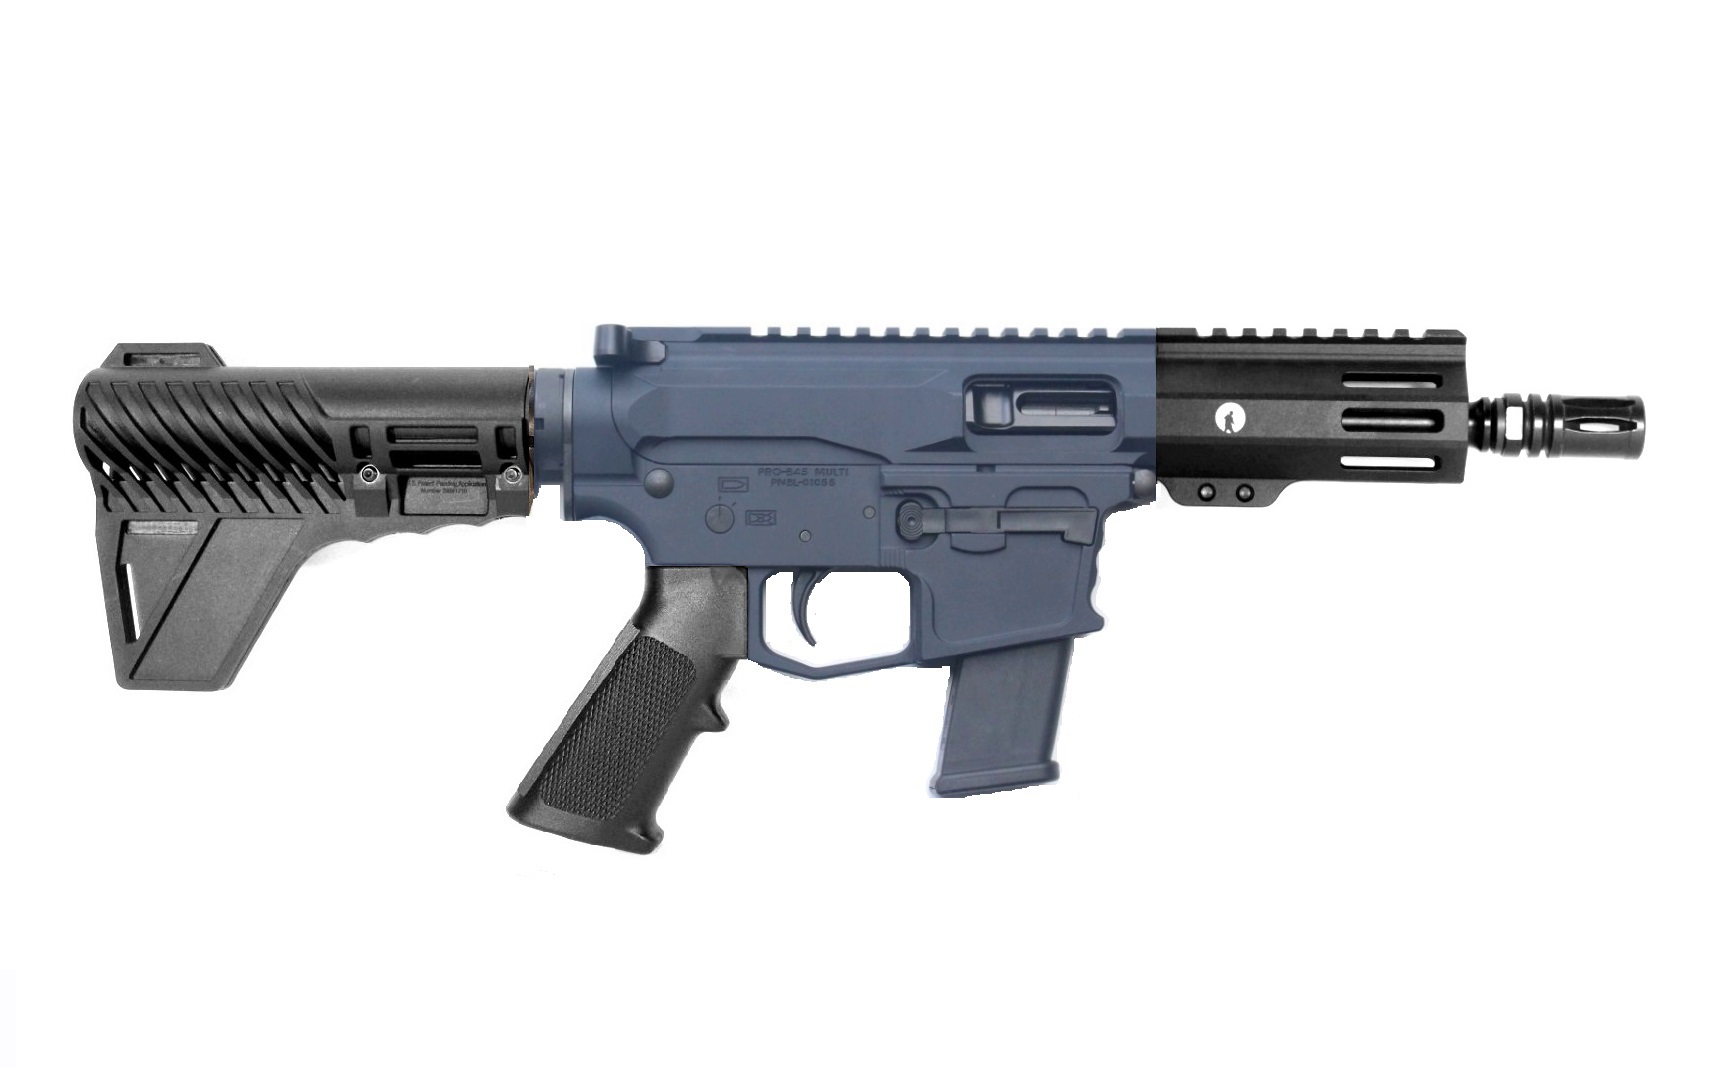 P2A PATRIOT 5" 45 ACP 1/16 Pistol Caliber Melonite M-LOK Pistol - For Suppressors - GRAY/BLK